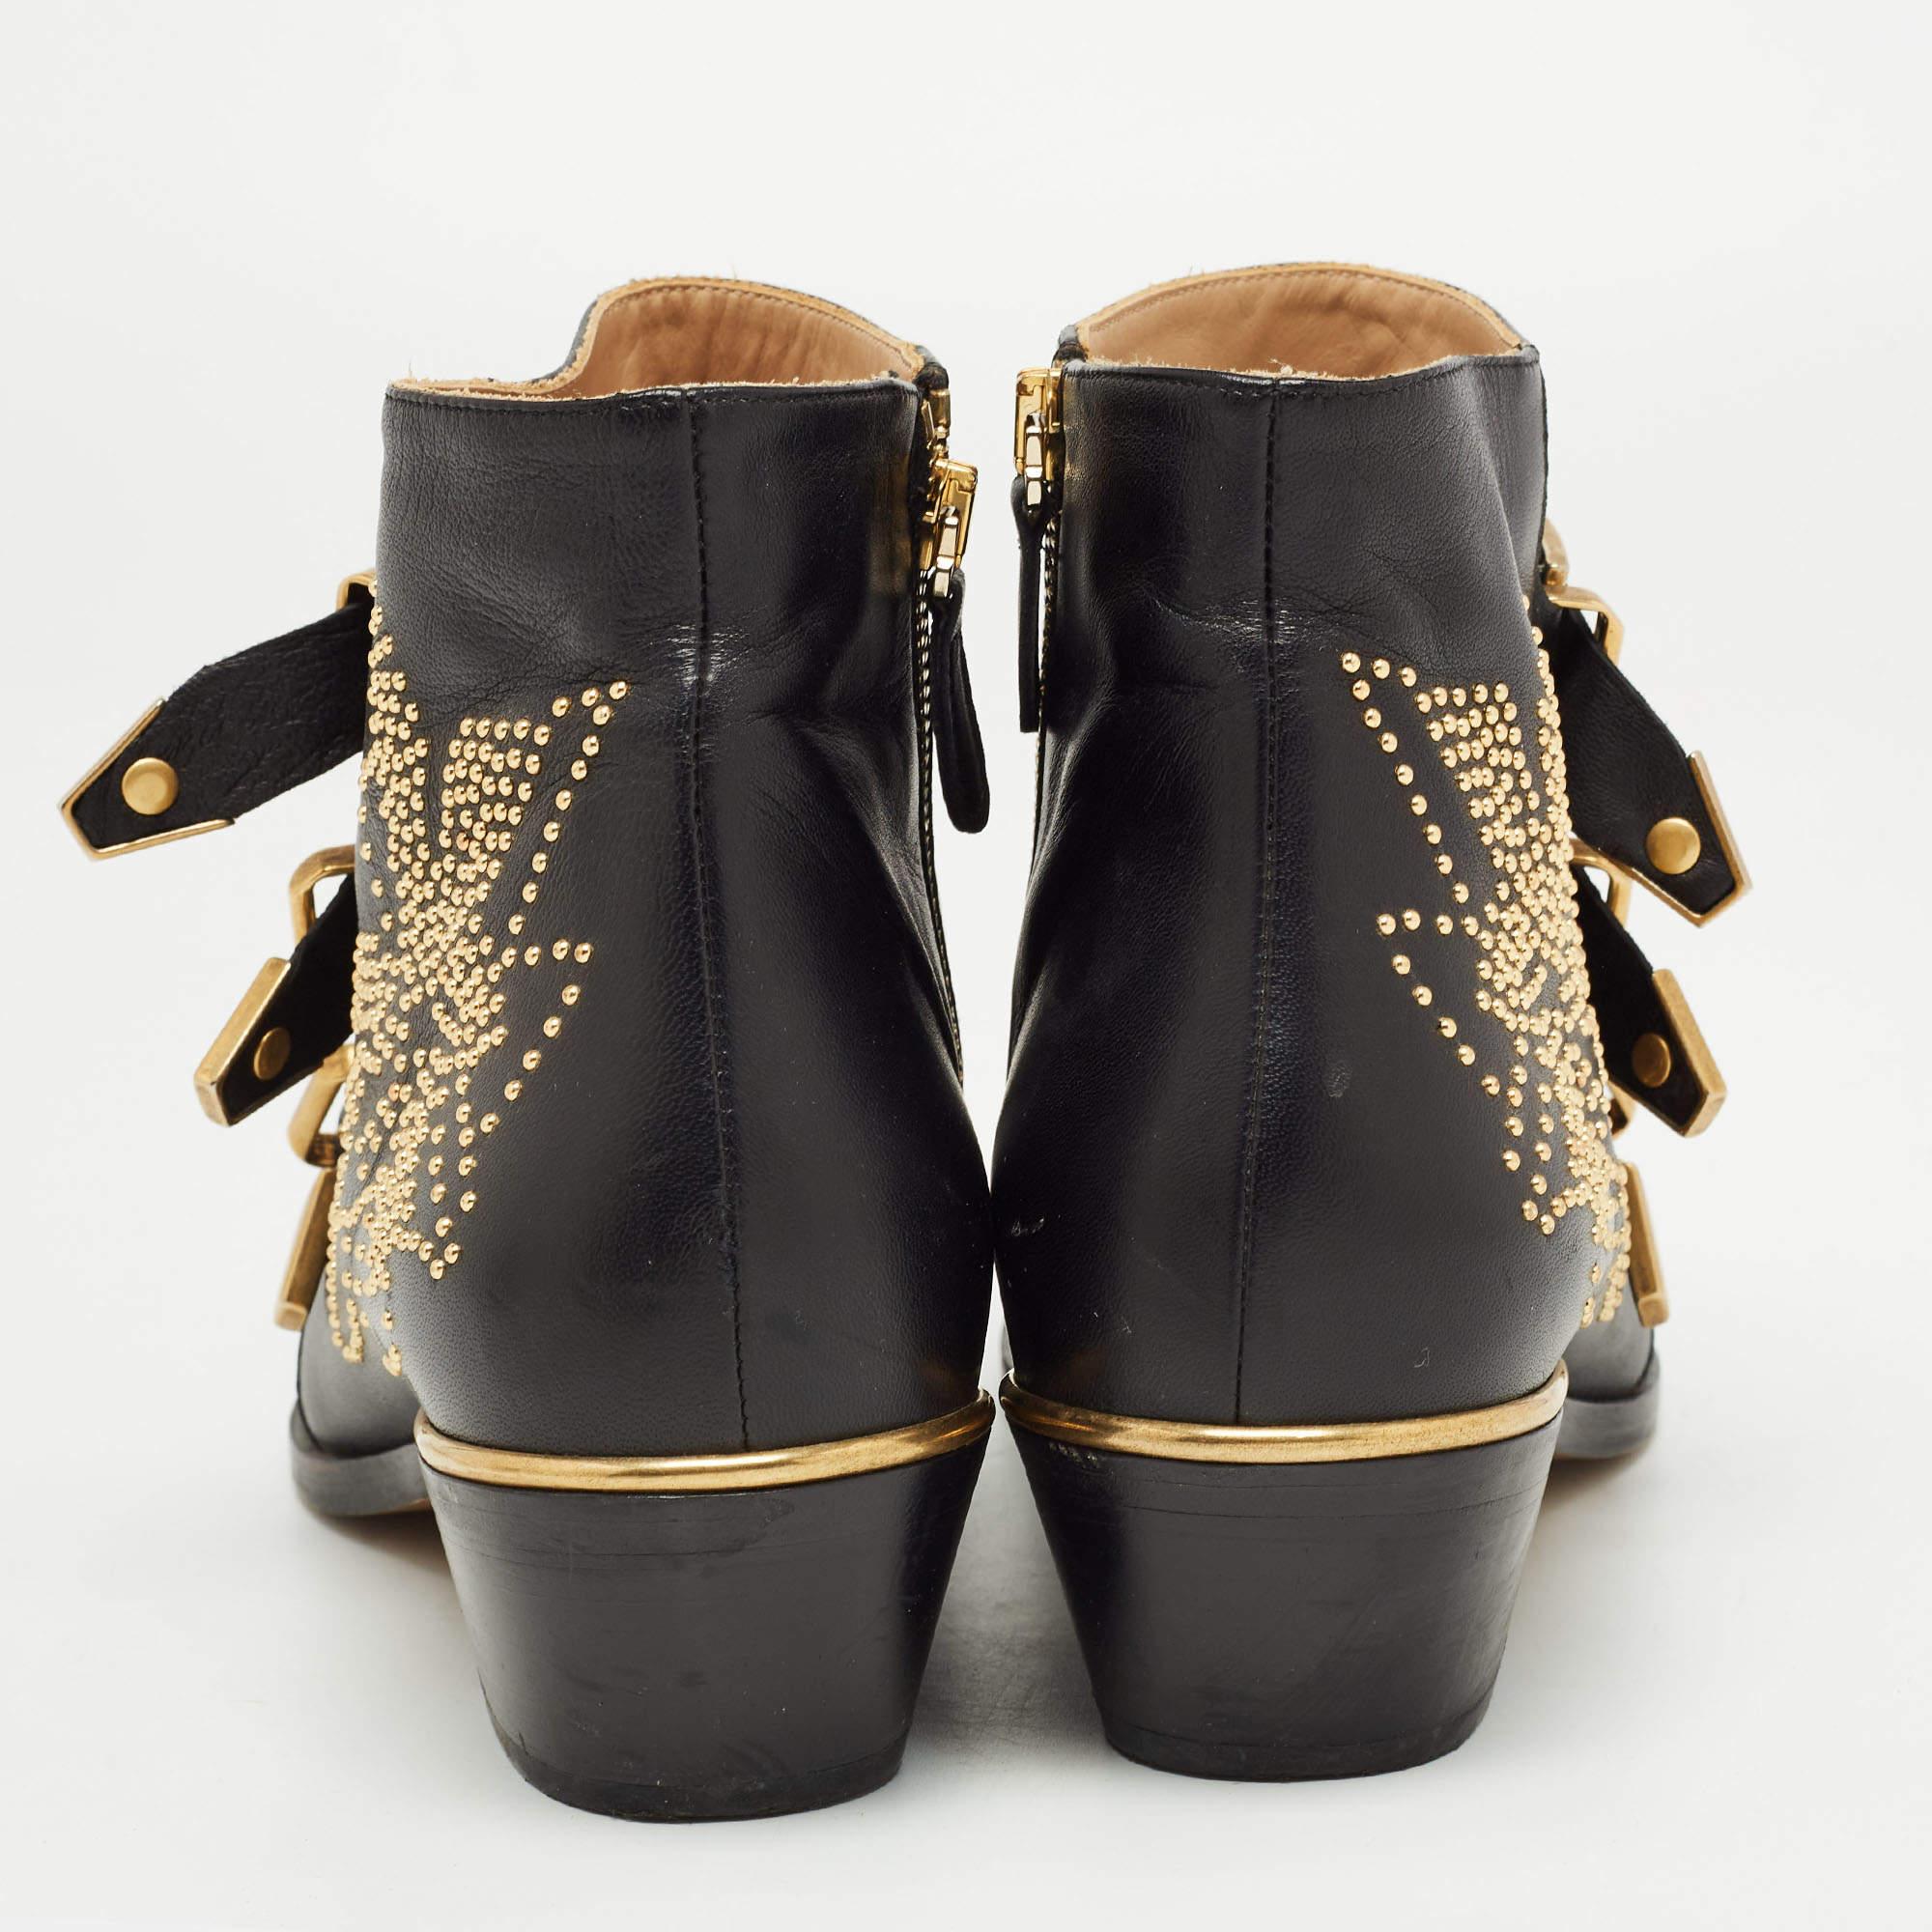 Chloe Black Leather Susanna Ankle Boots Size 39.5 2